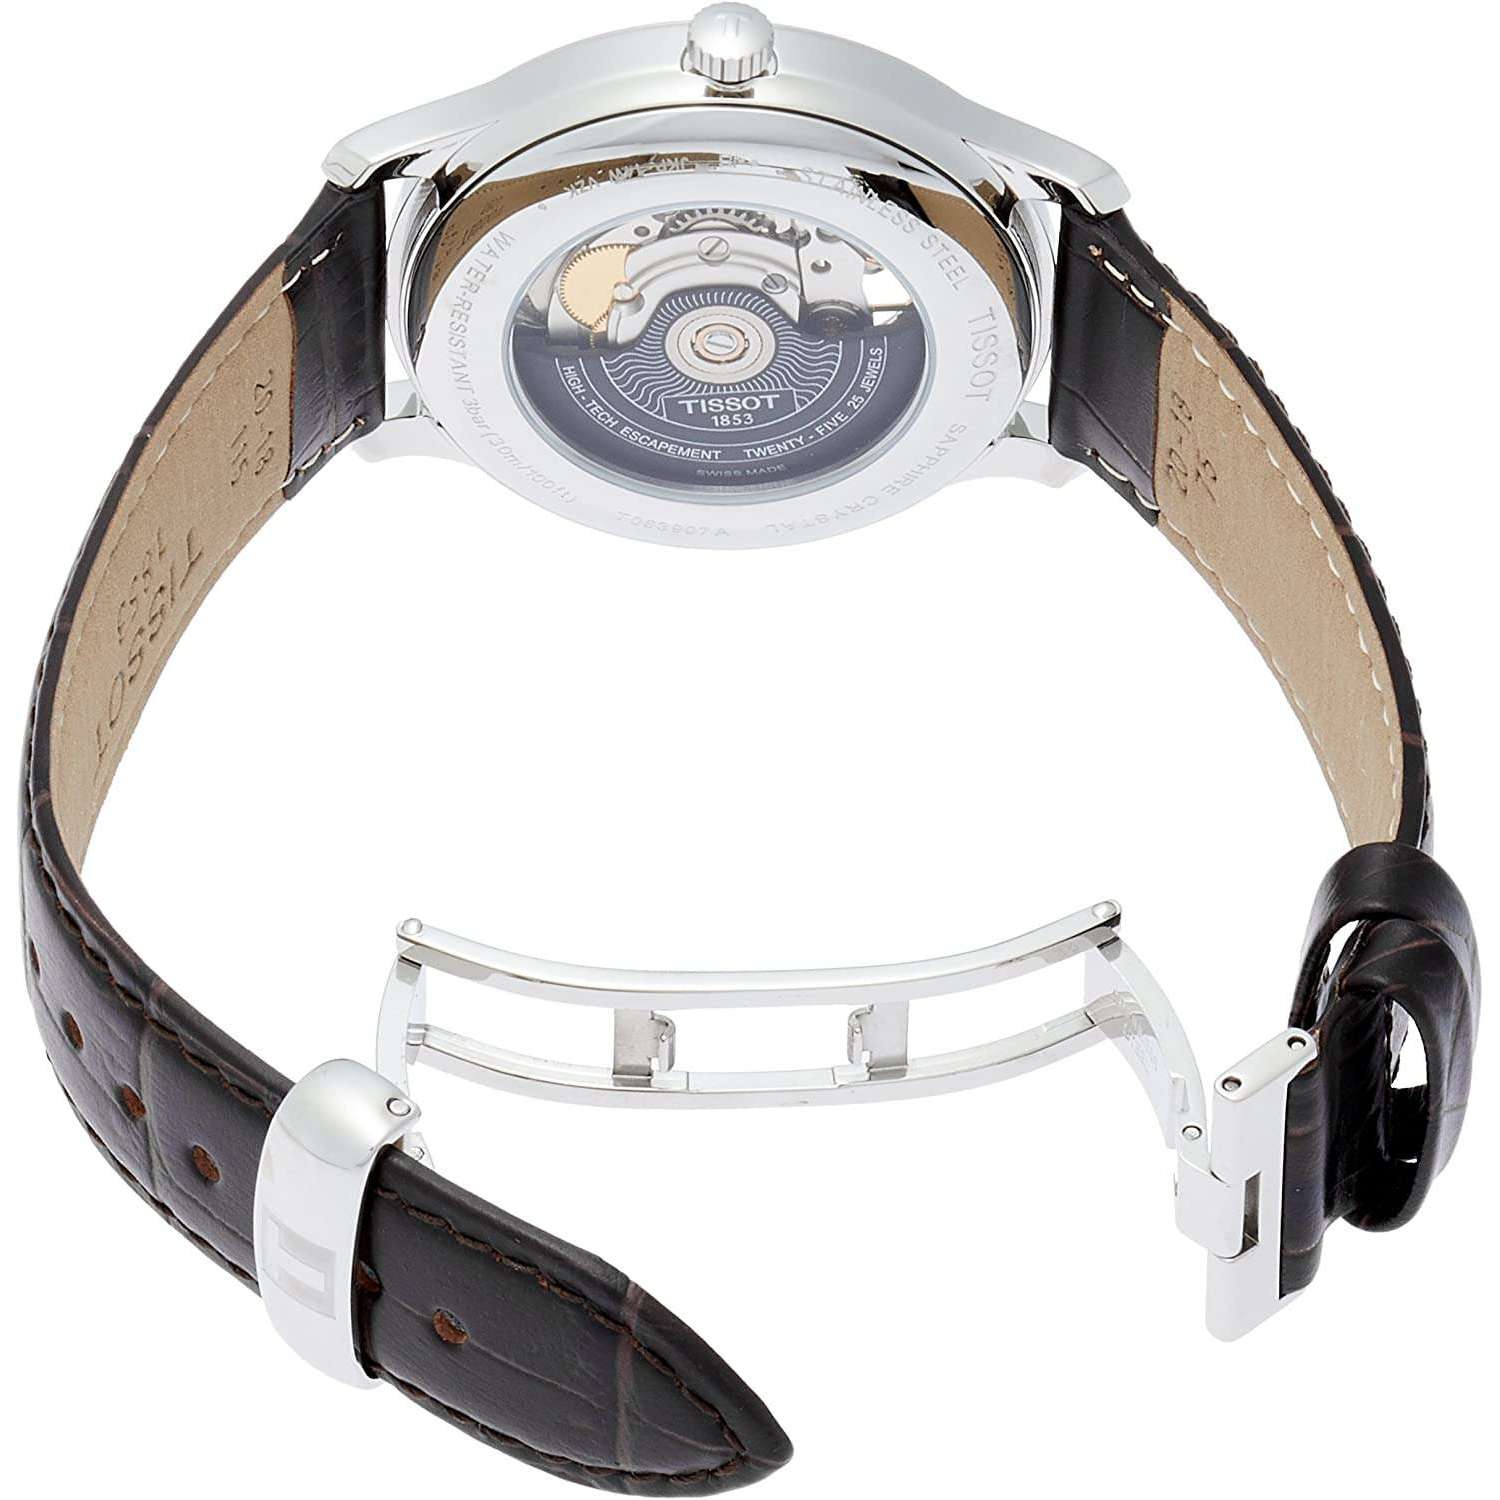 ROOK JAPAN:TISSOT TRADITION POWERMATIC 80 AUTOMATIC 40 MM MEN WATCH T0639071603800,Luxury Watch,Tissot Tradition